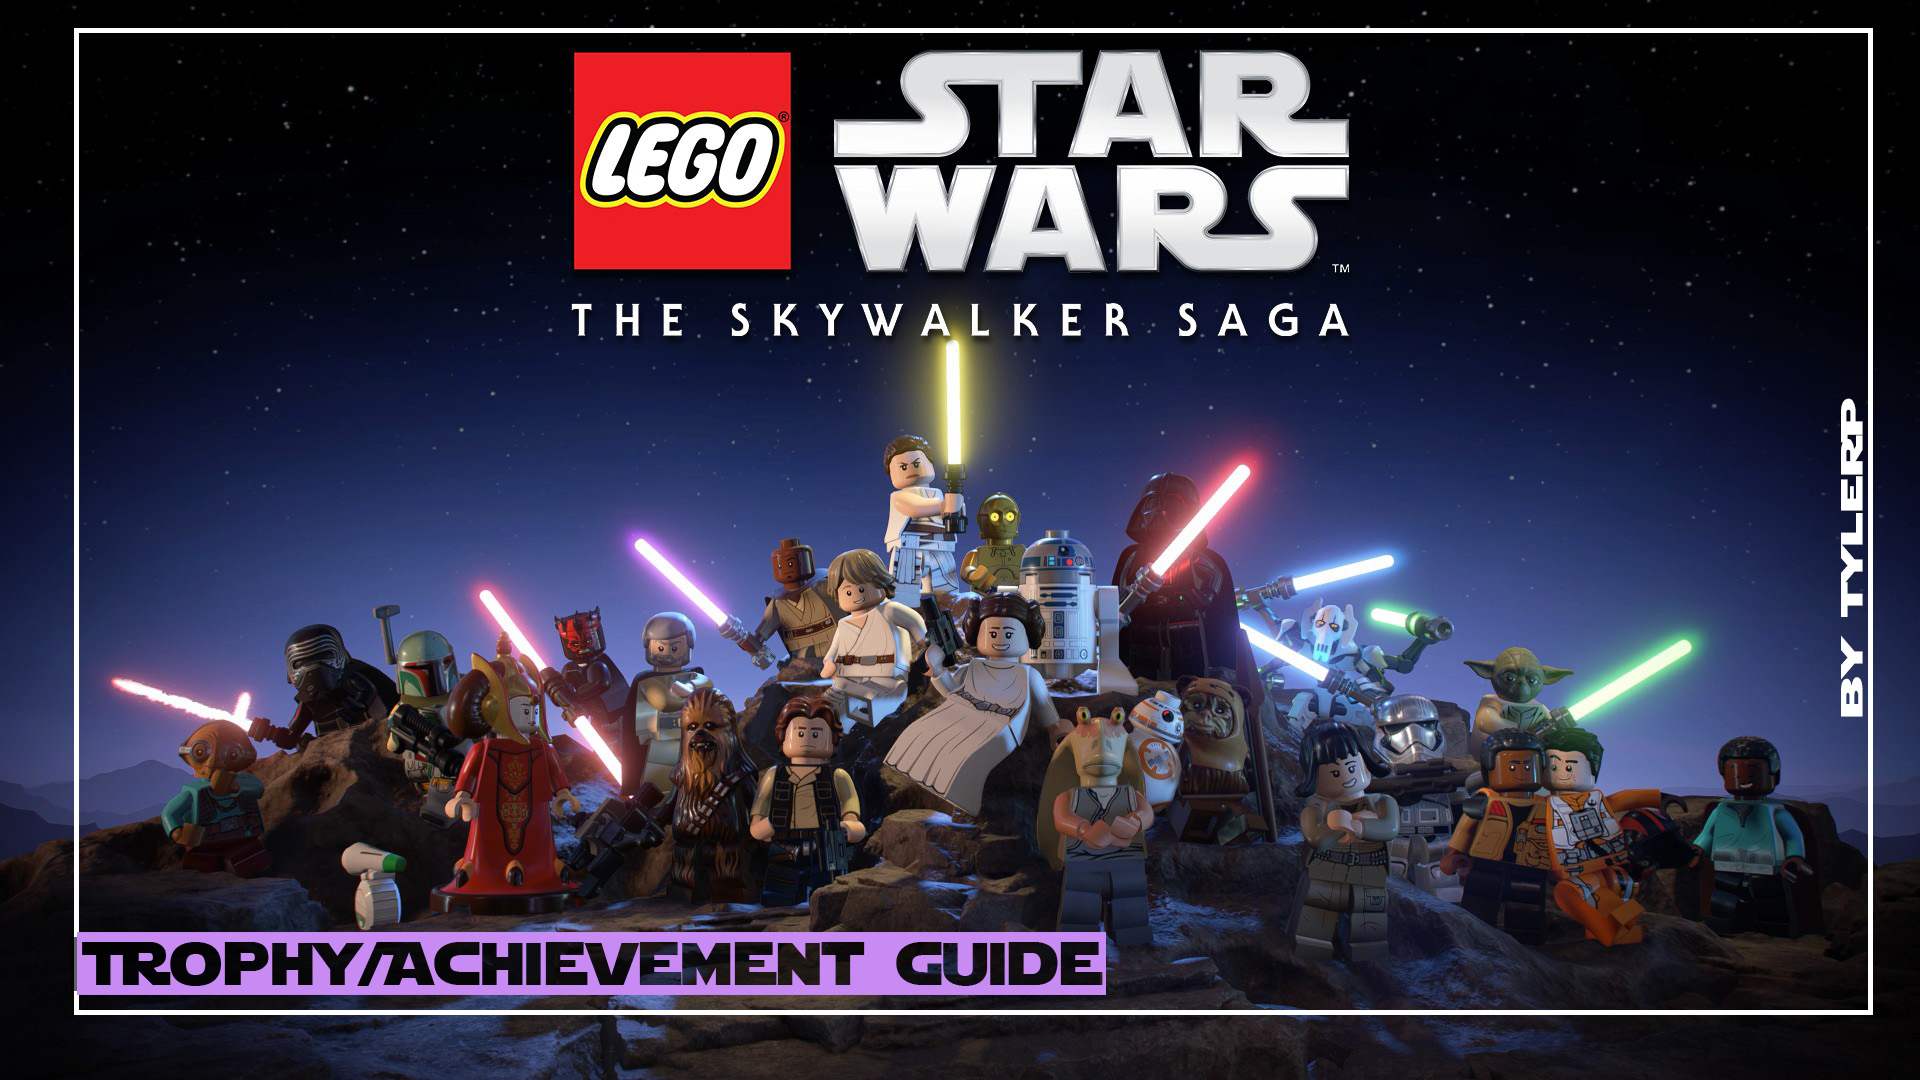 LEGO Star Wars The Skywalker Saga Trophy/Achievement Guide